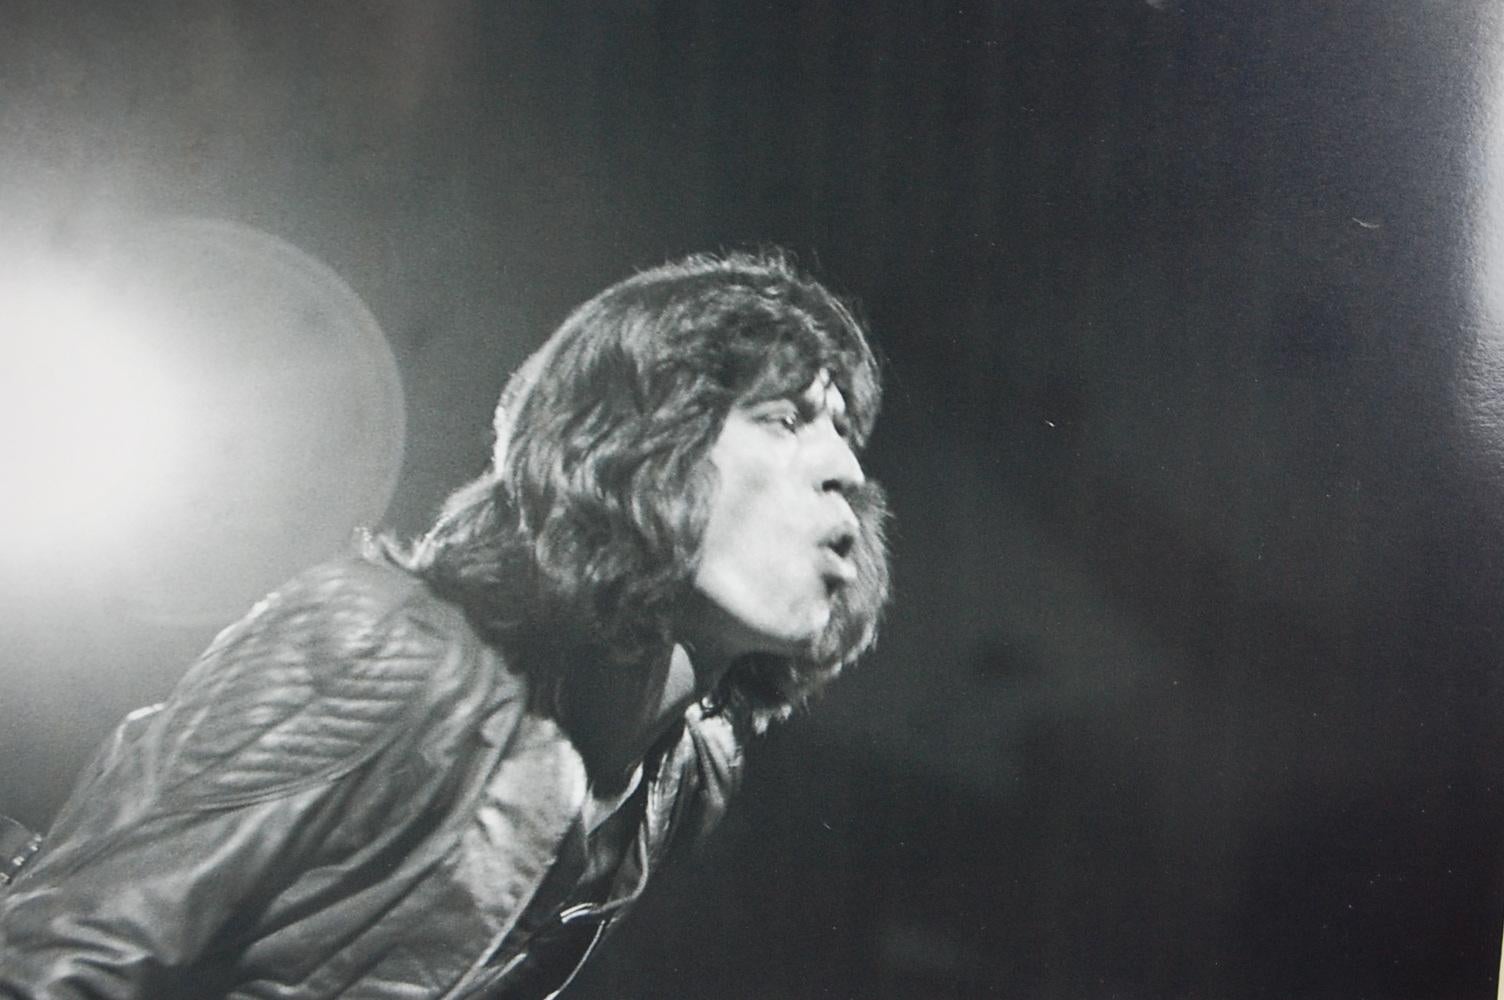 English Mick Jagger Photograph - On Stage, London